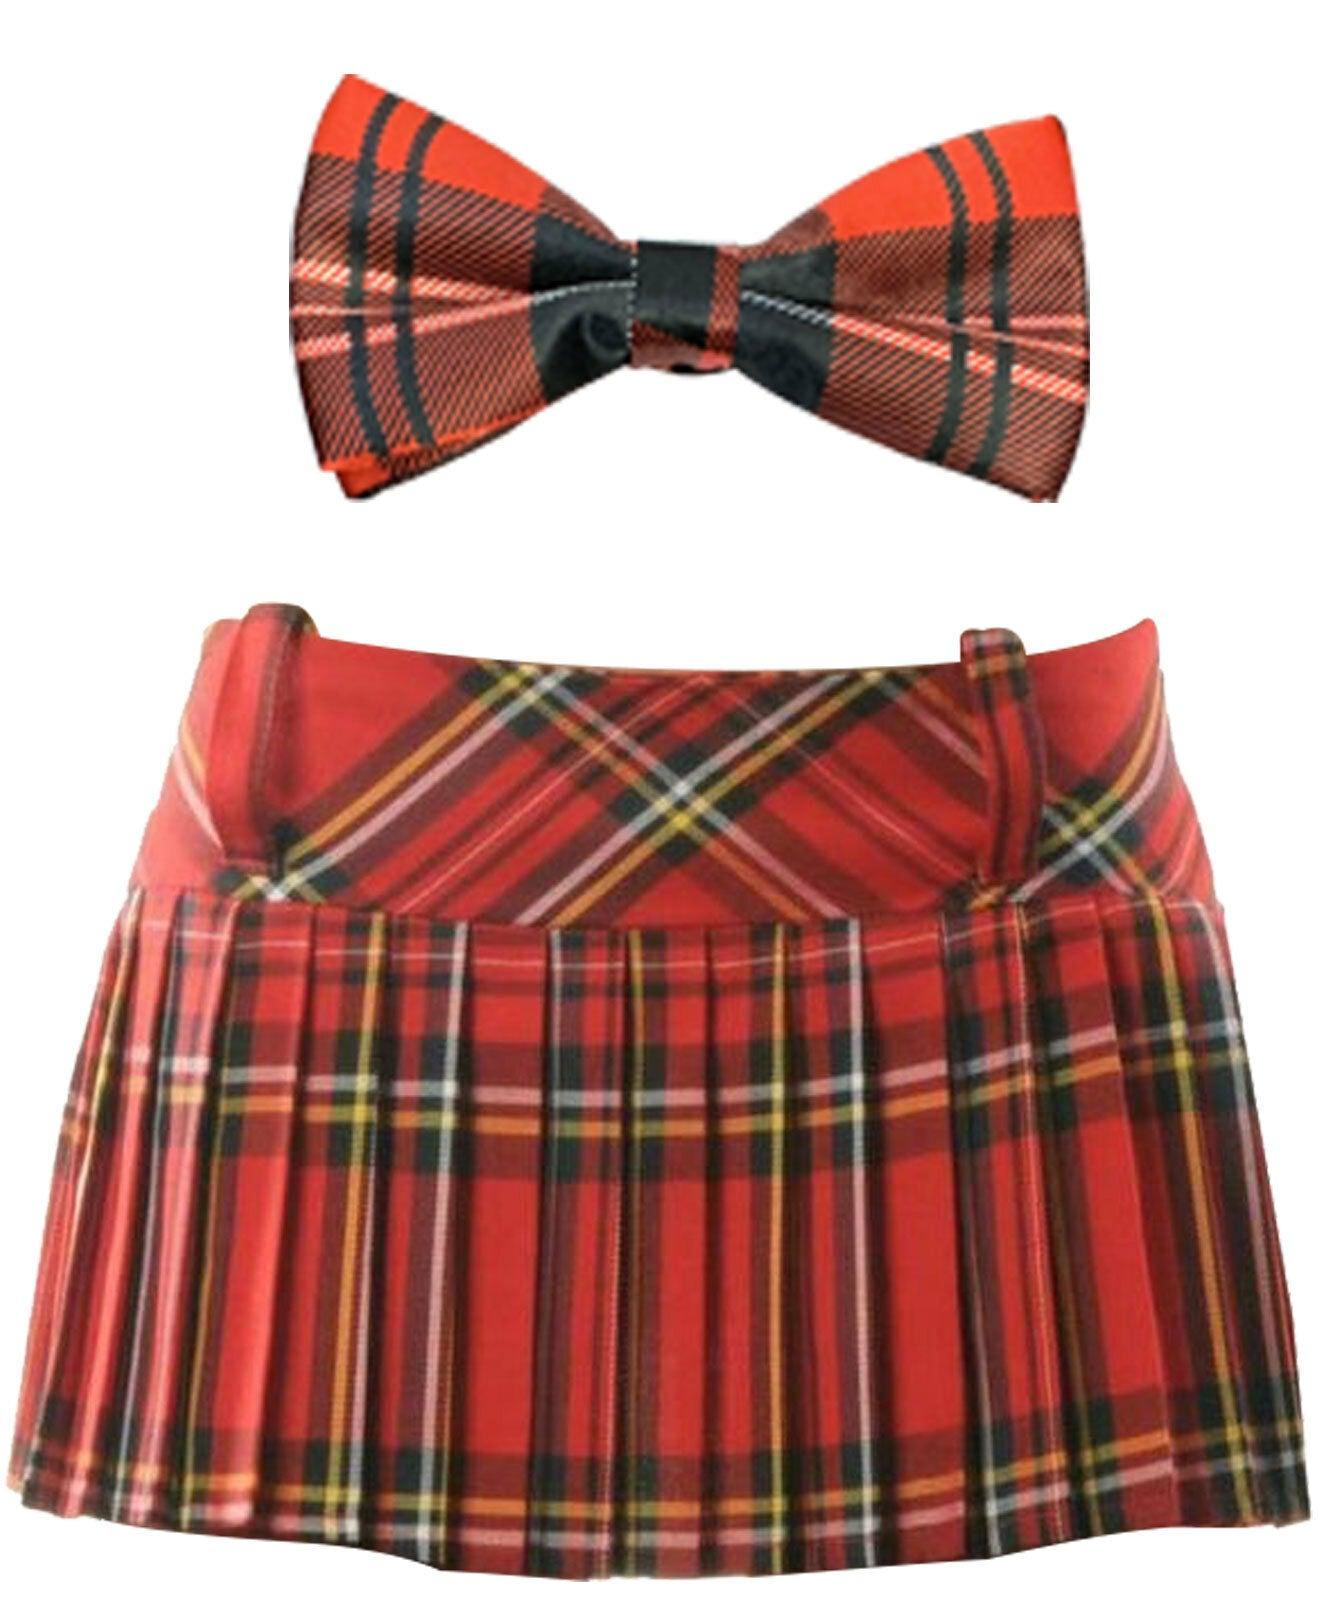 Burn's Night Scottish Red Tartan 9 inch Skirt Bowtie School Girl Fancy Dress - Labreeze